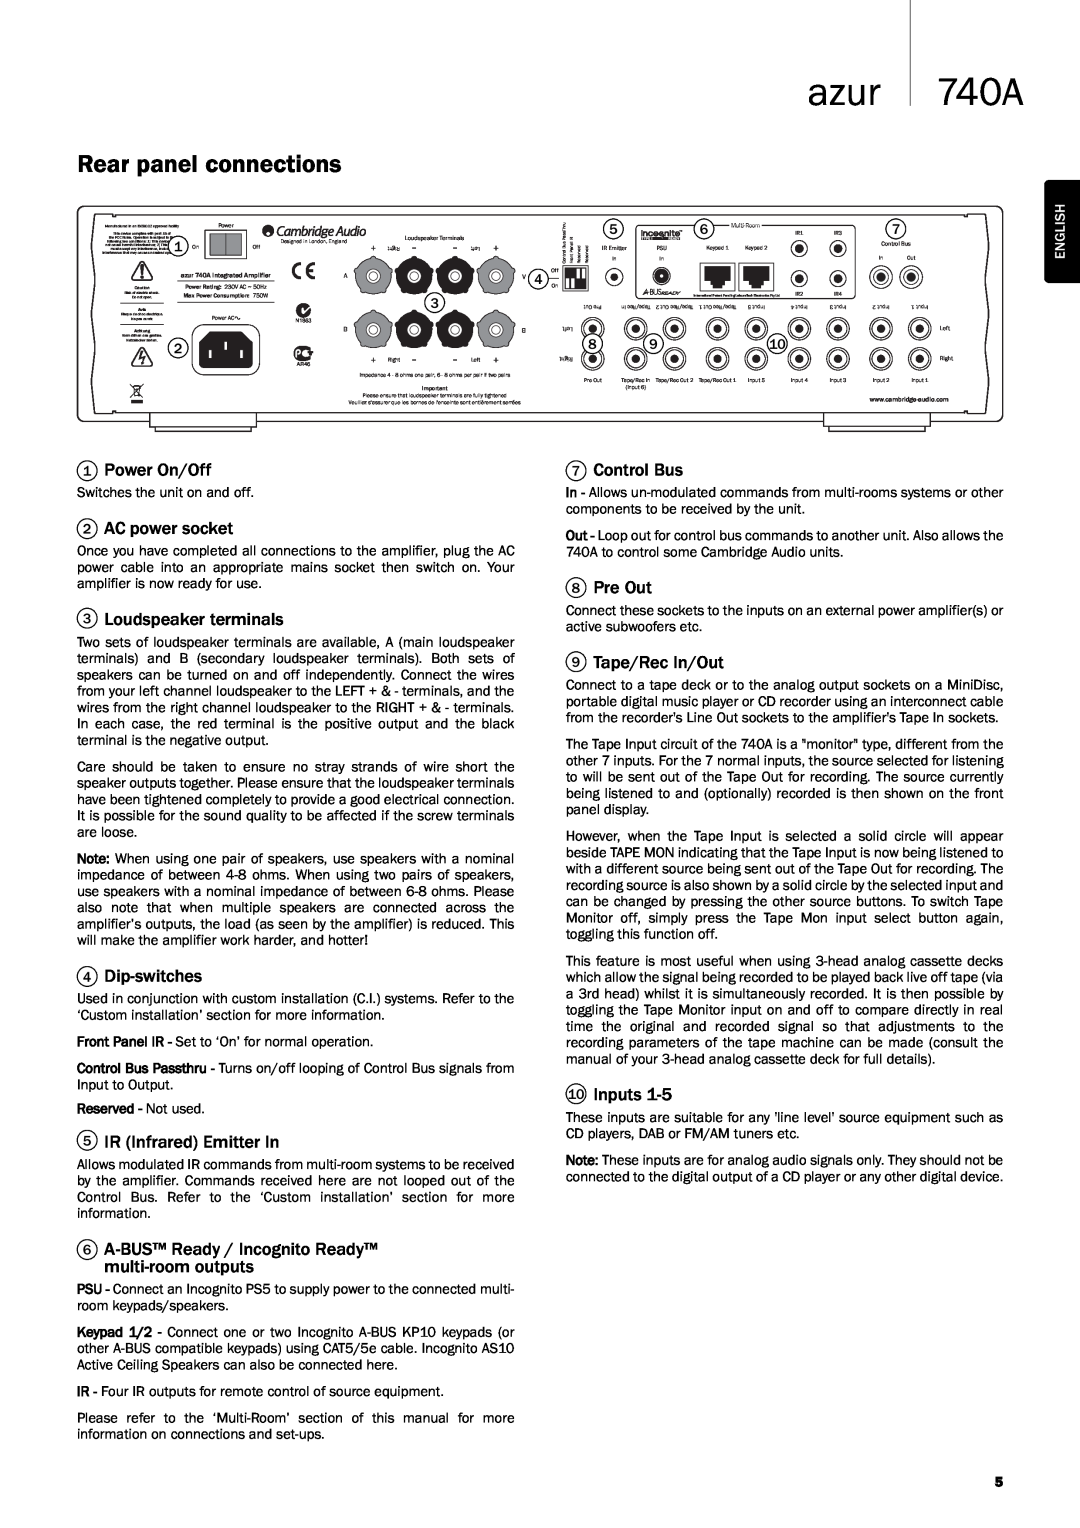 Cambridge Audio Azur 740A user manual Rear panel connections, azur 740A 